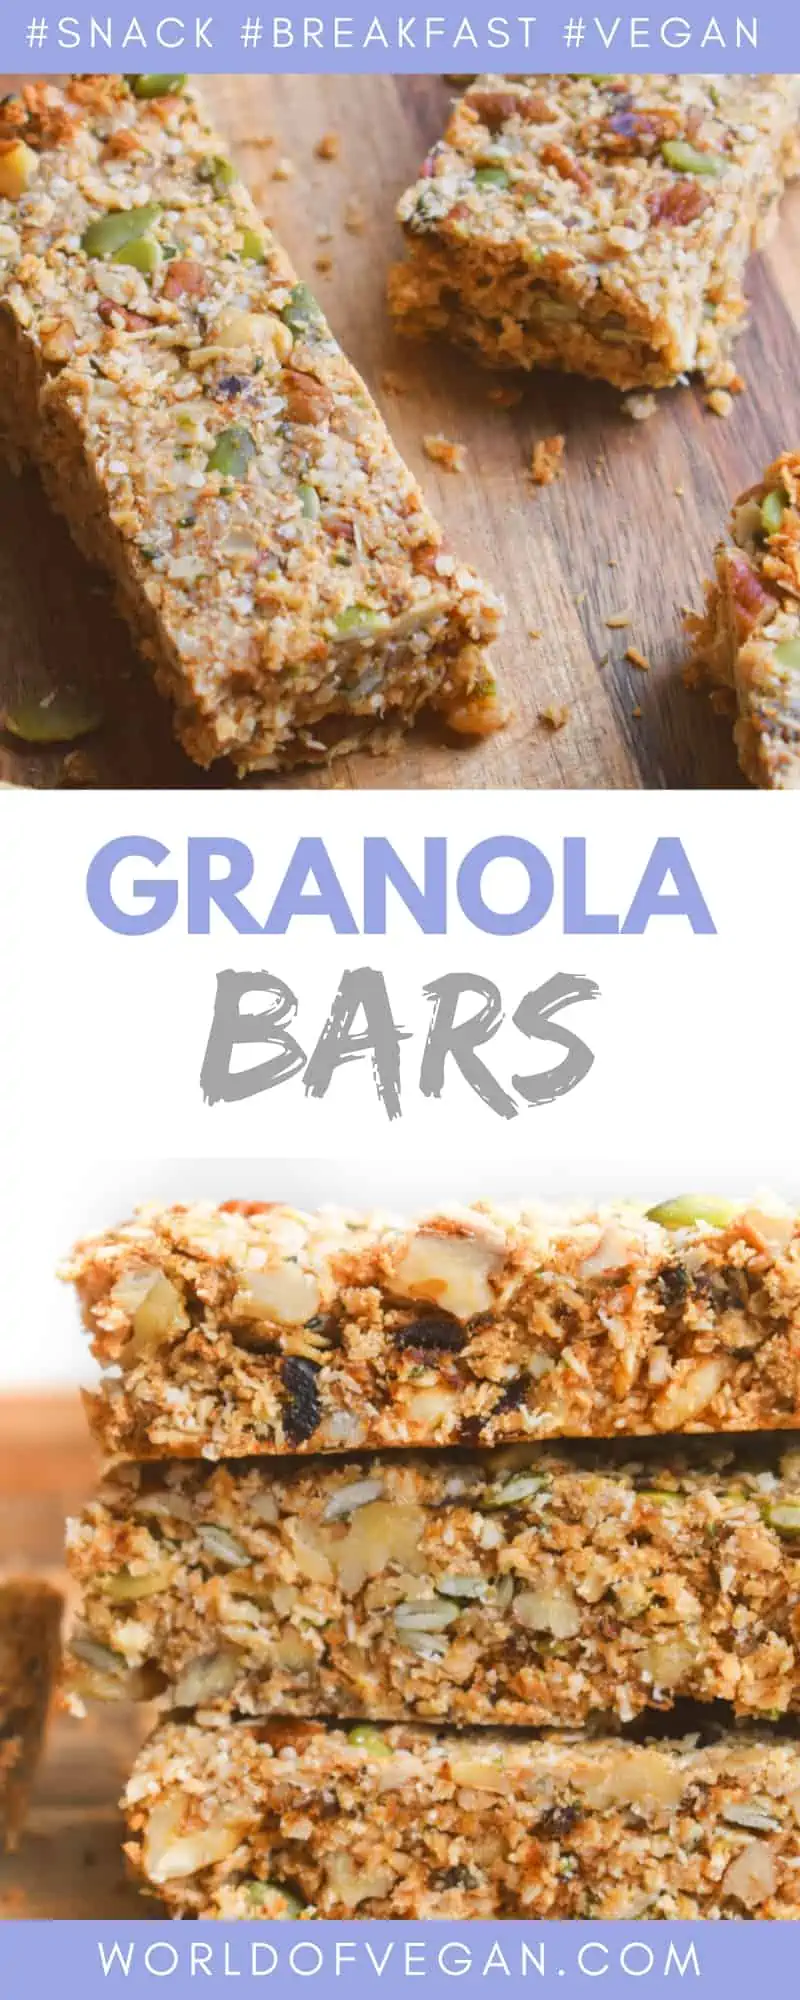 Homemade Granola Bars | Healthy Snack On The Go | World of Vegan | #granola #bars #snack #vegan #breakfast #fall #worldofvegan